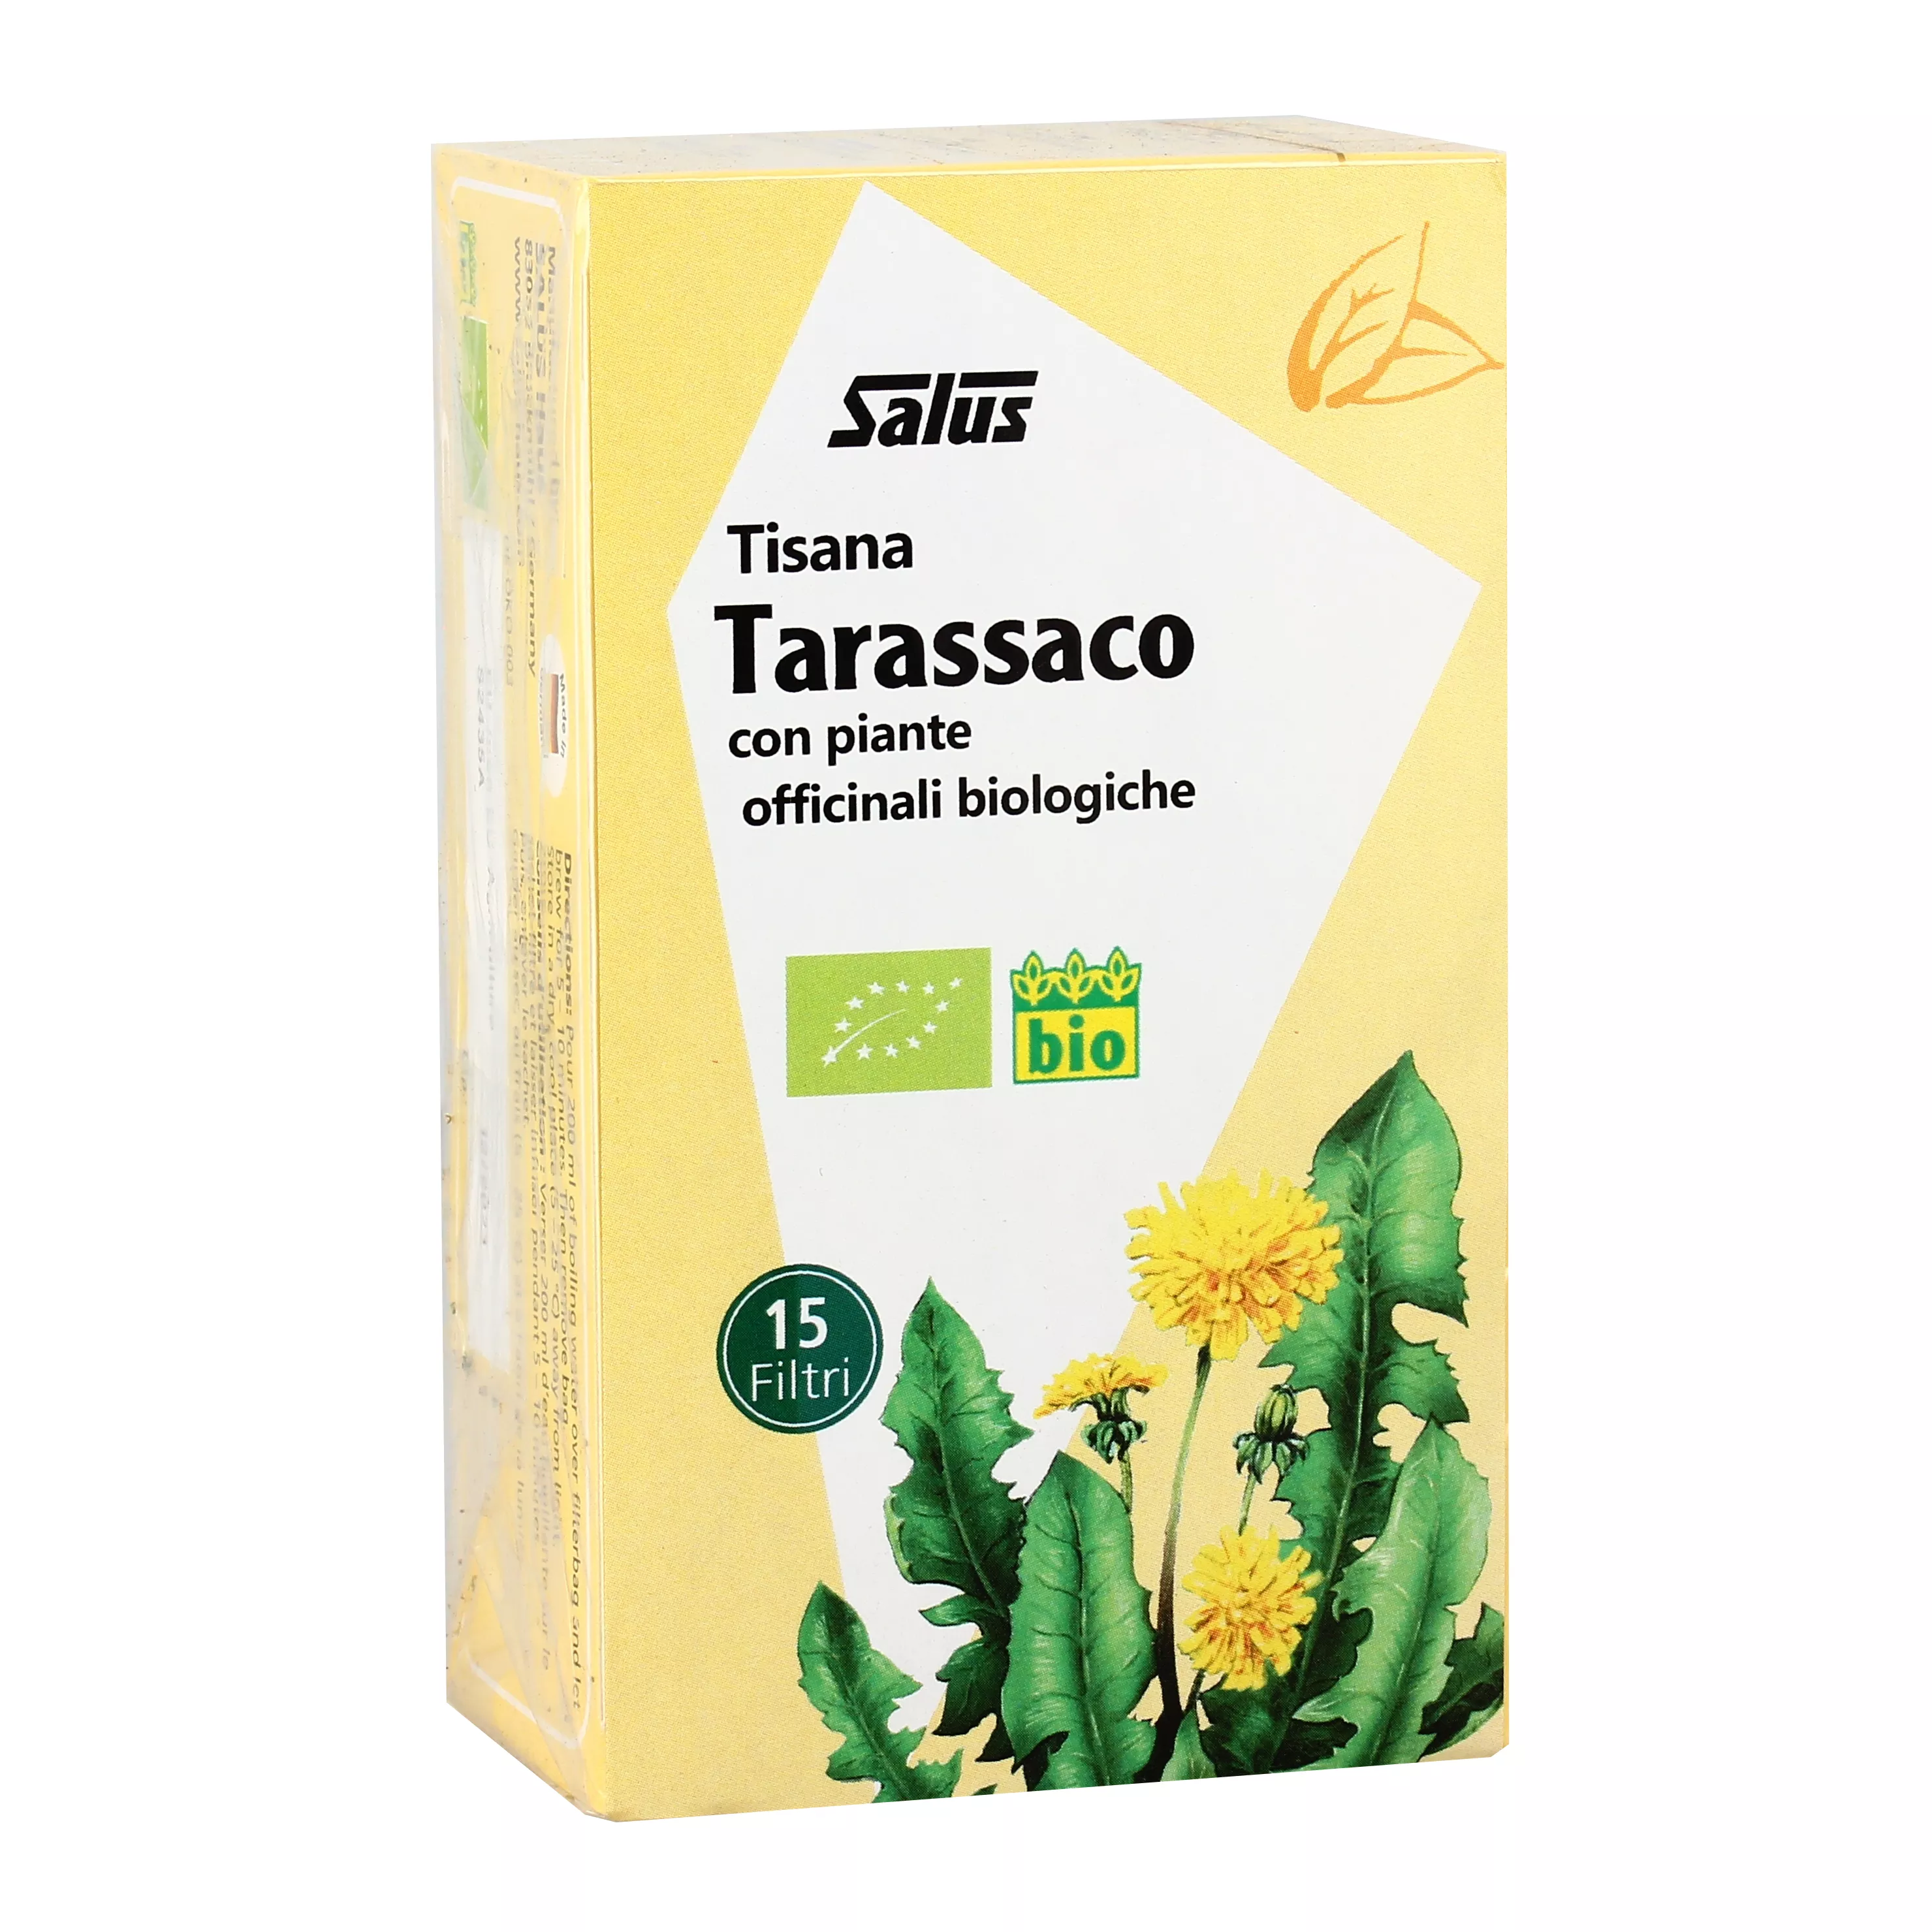 TARASSACO TISANA 15FLT BIO - Alterfarma